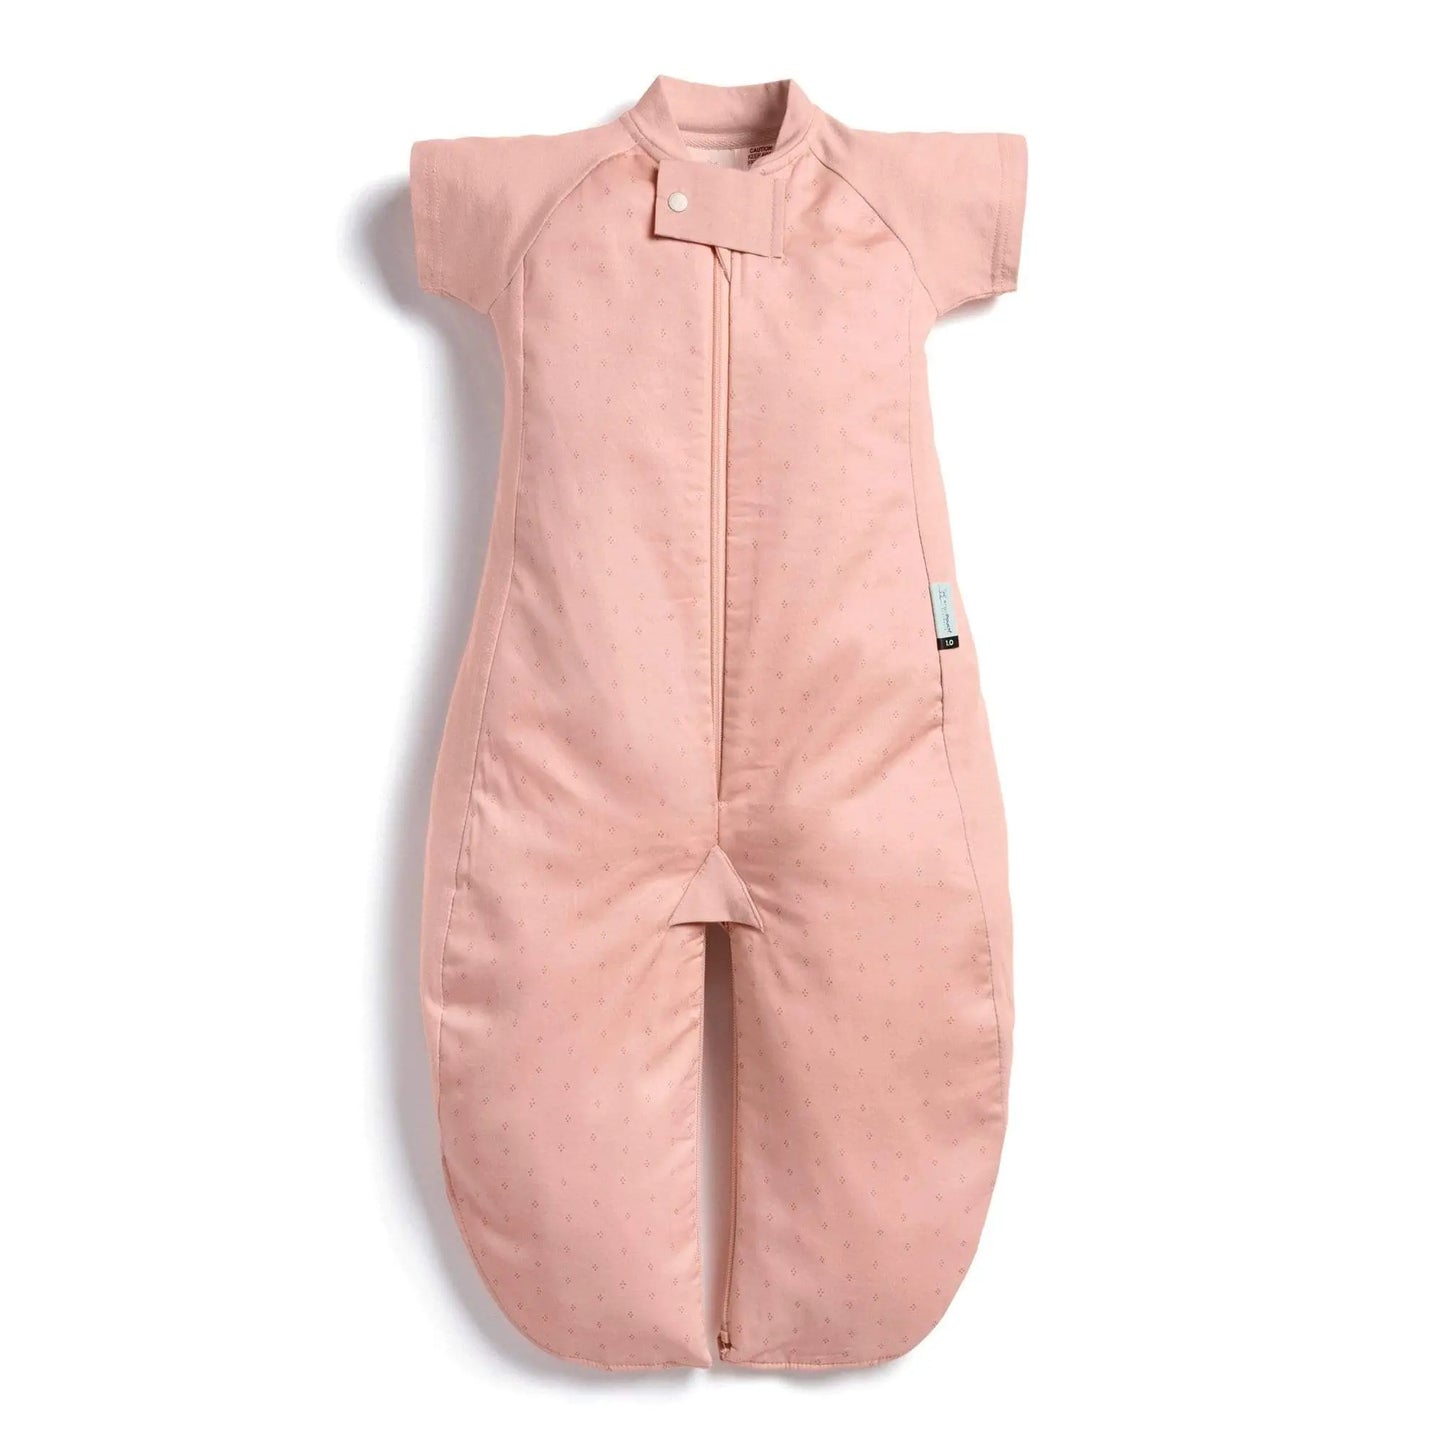 Sleeping Bags Ergopouch Baby Sleep Suit Bag 1.0 TOG Berries ErgoPouch 69.99